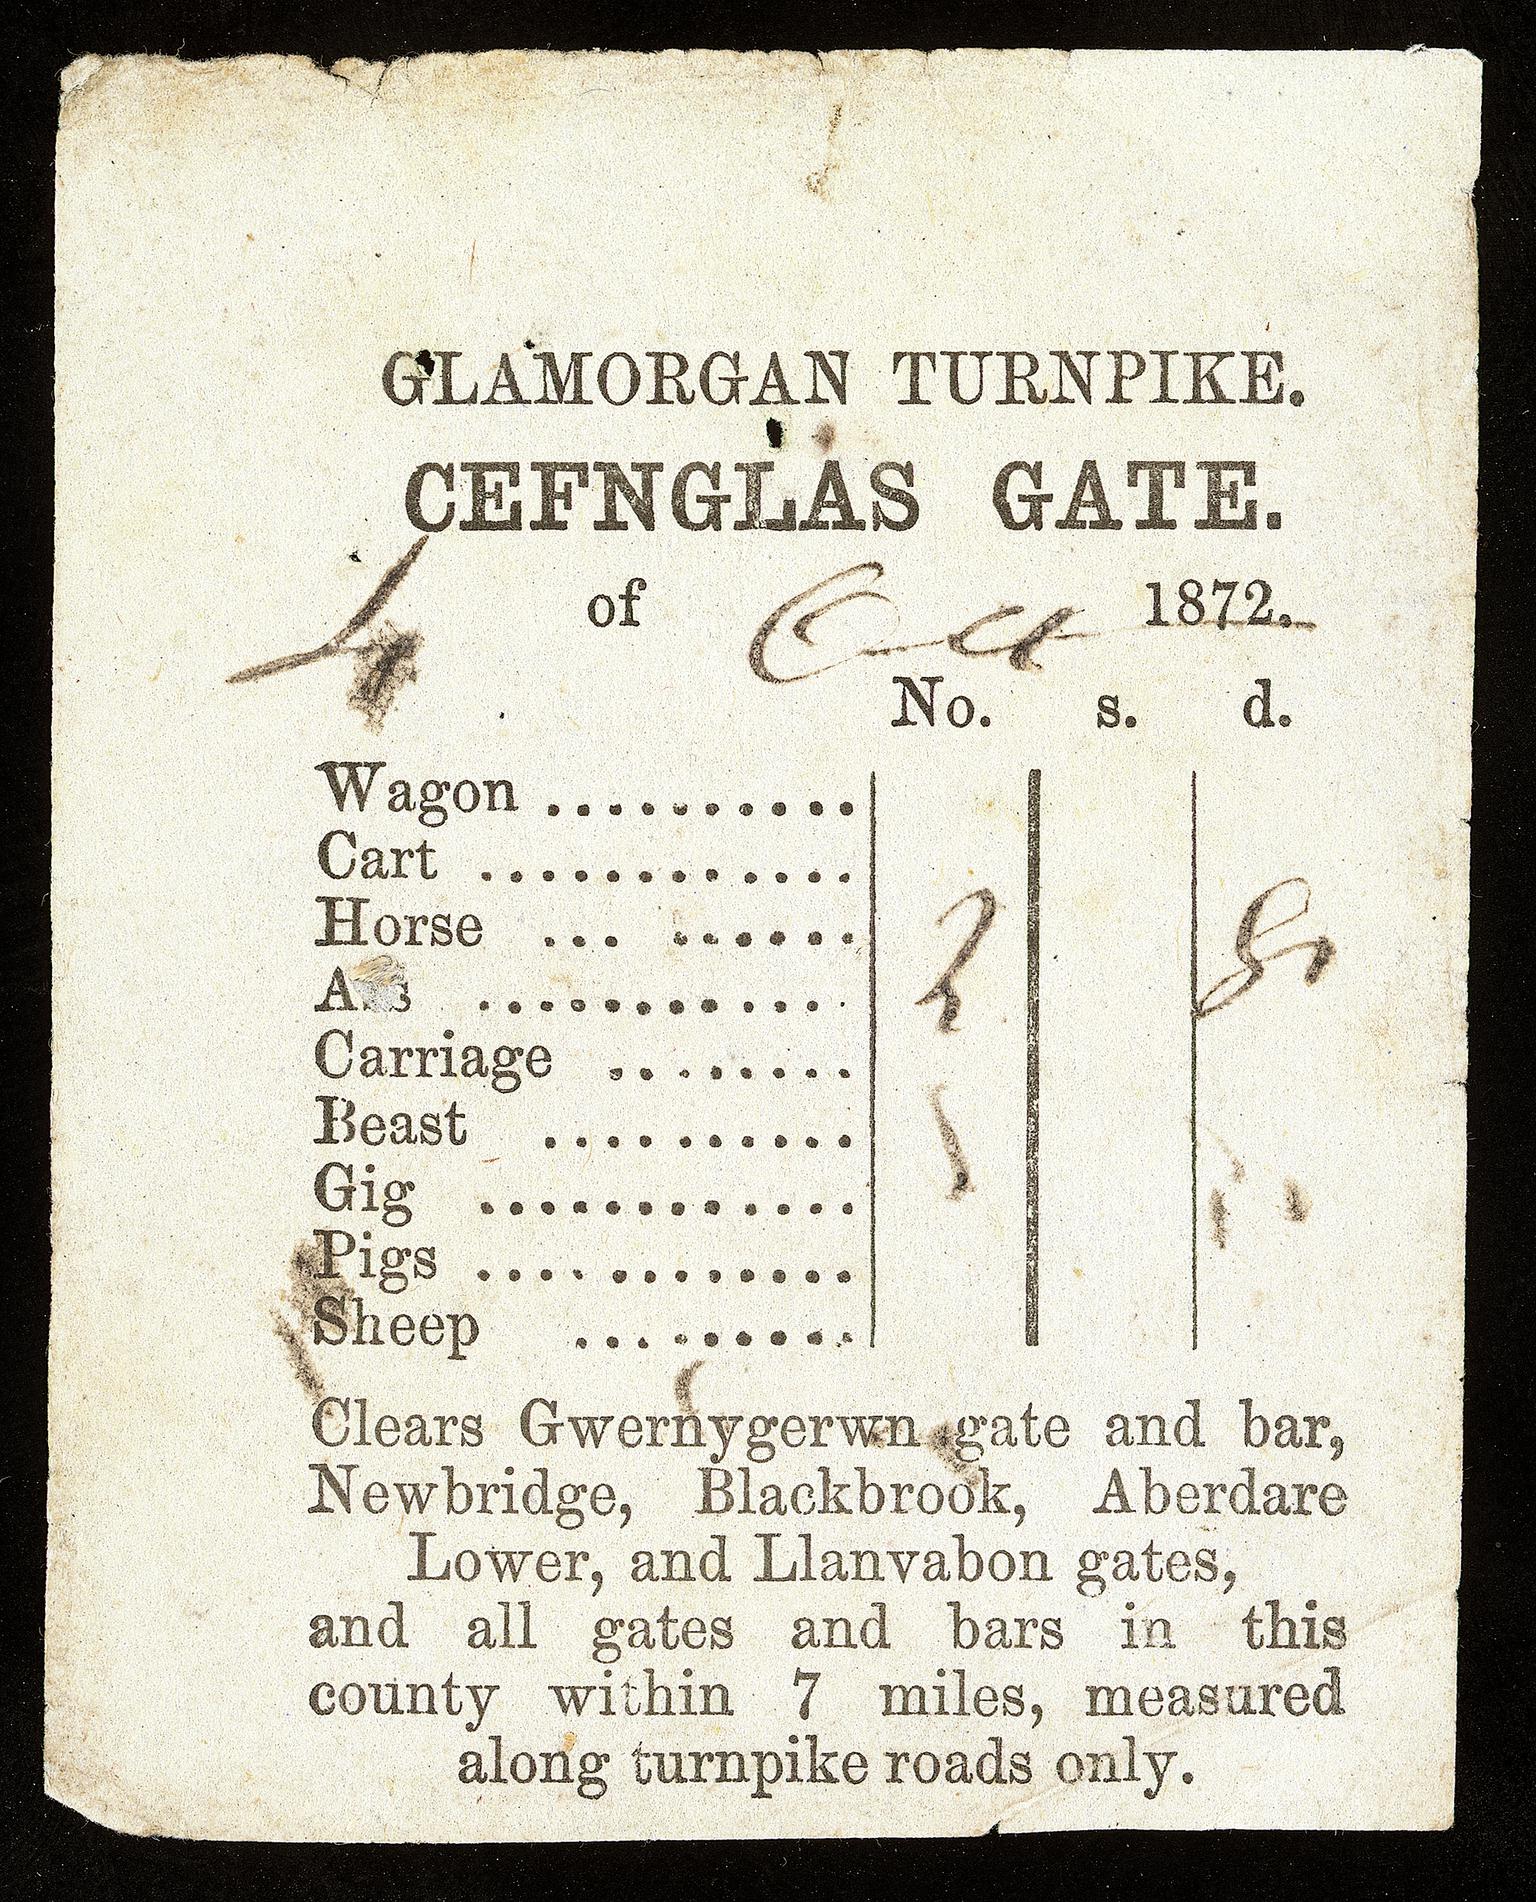 Glamorgan Turnpike, Cefnglas Gate, ticket